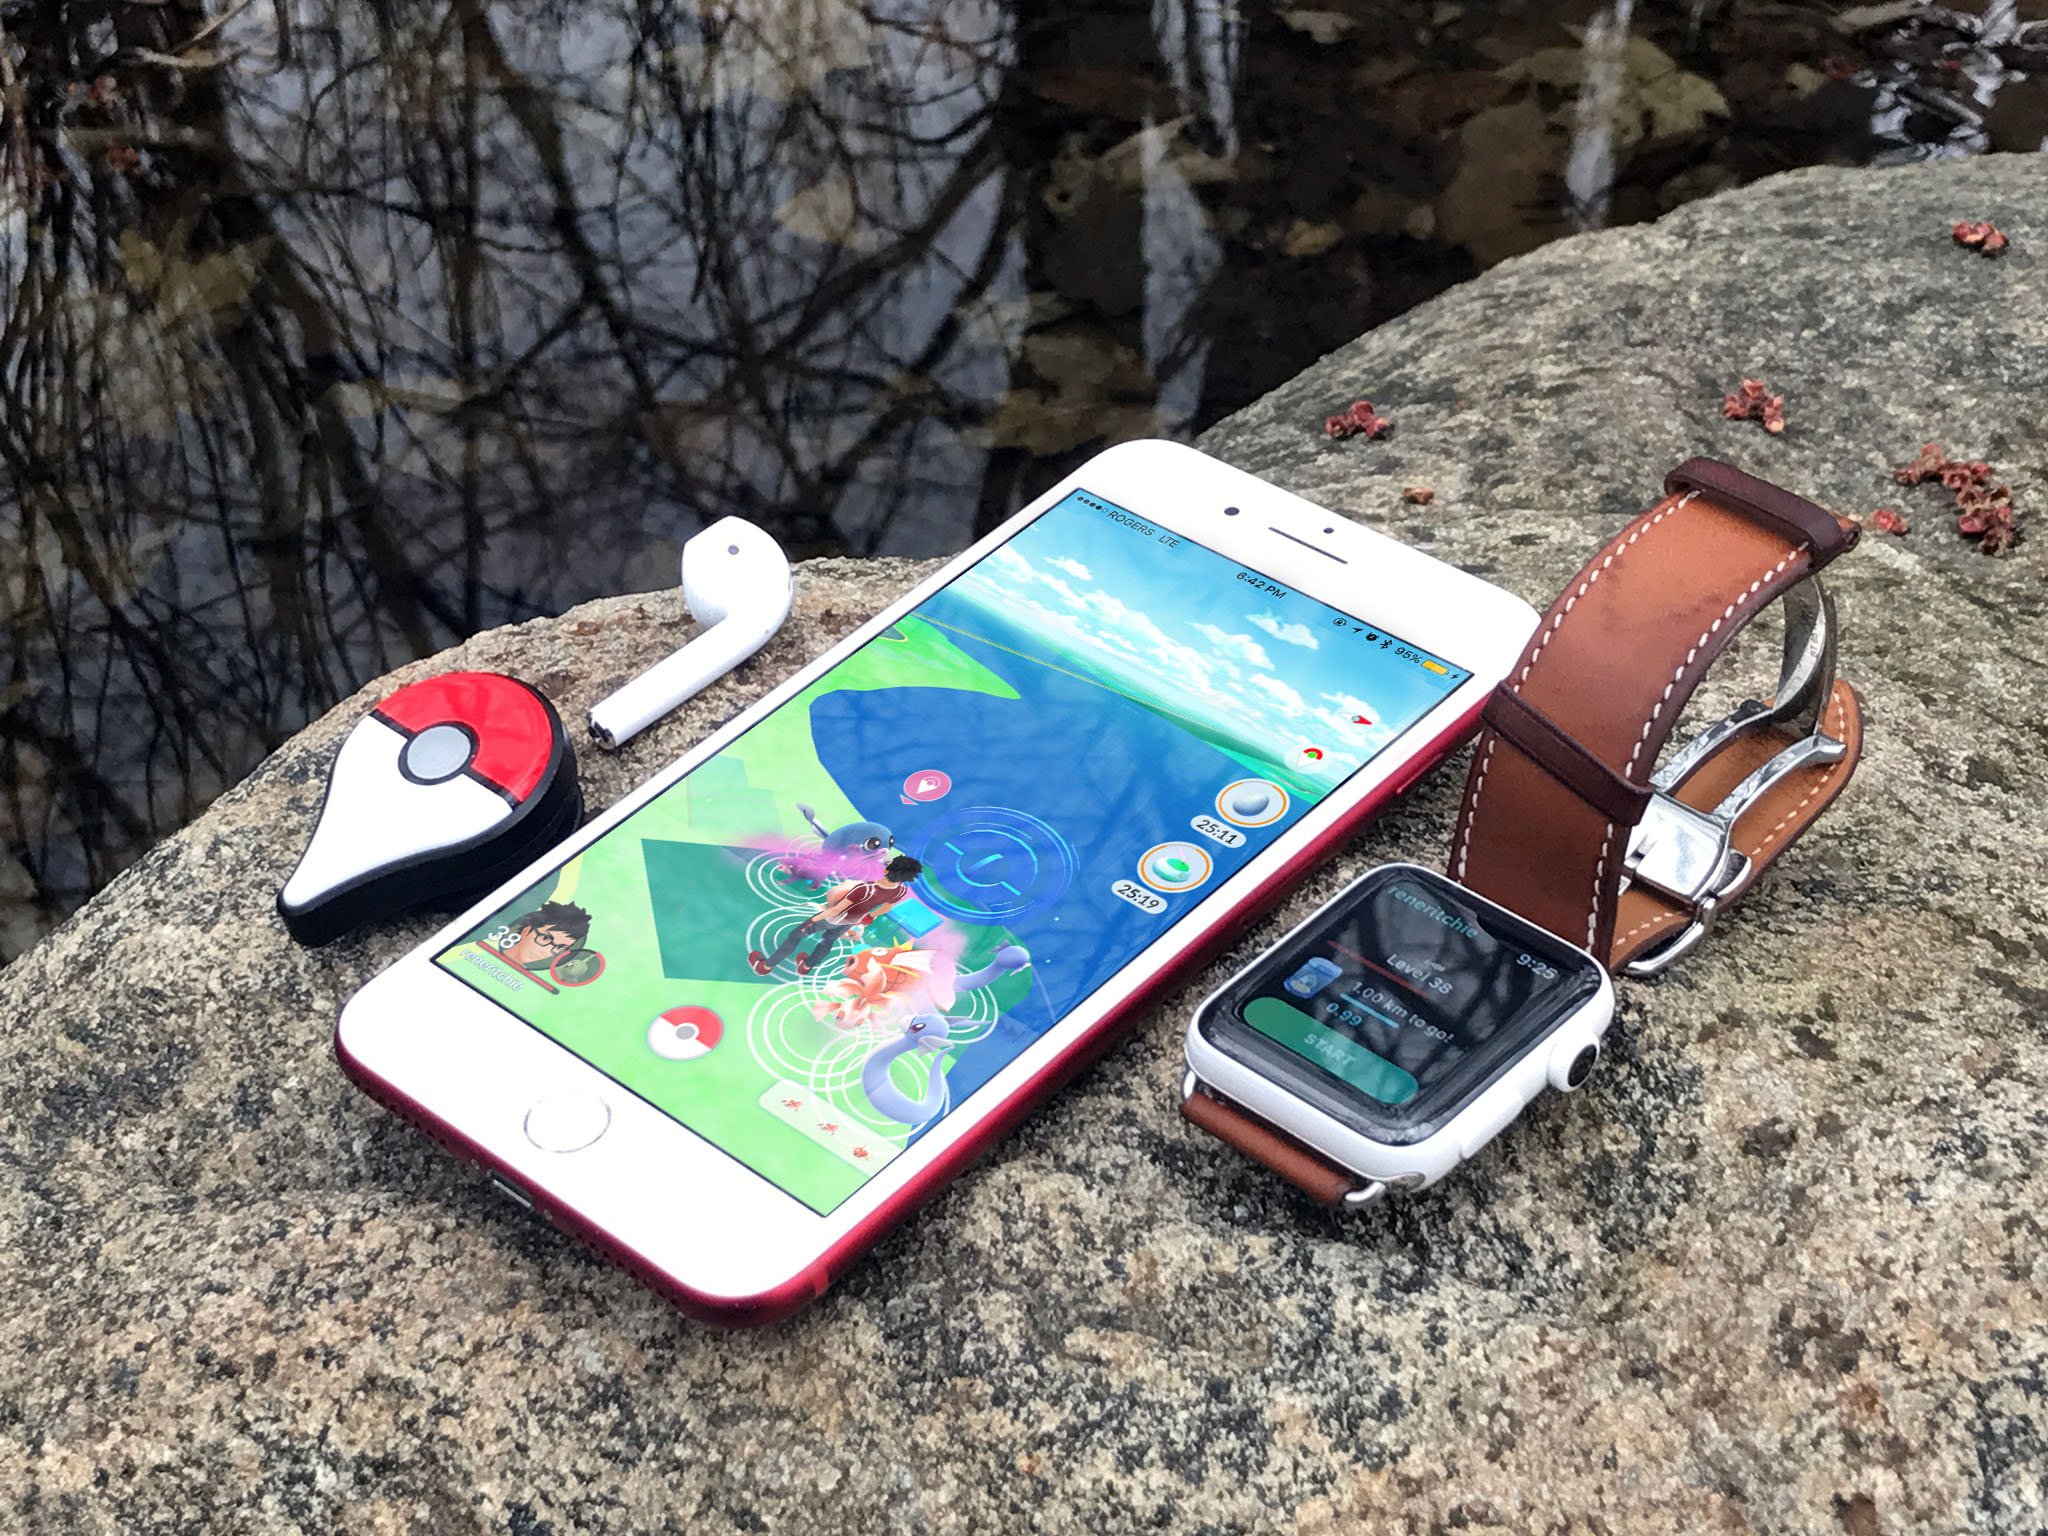 Pokémon Go Plus Apple Watch and Phone